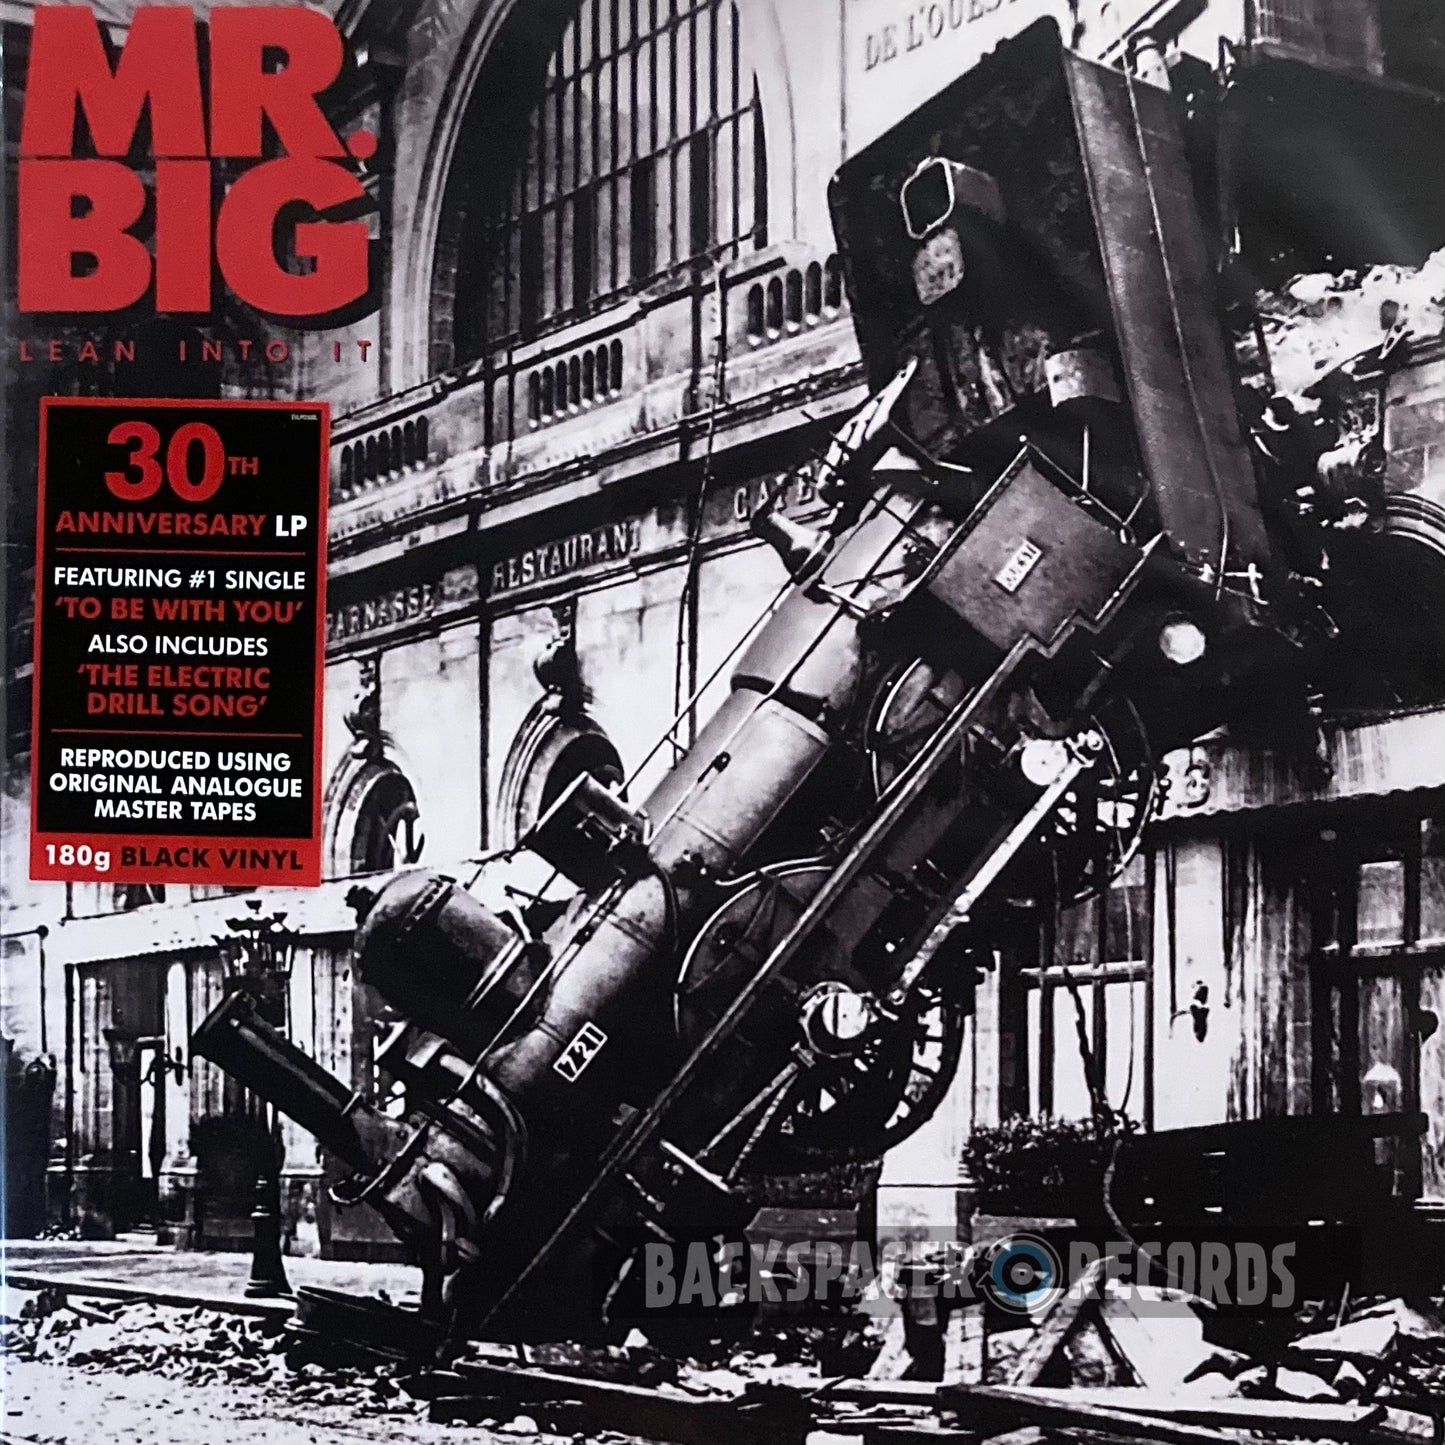 Mr Big - Lean Into It (30th Anniversary) LP (Limited Edition)